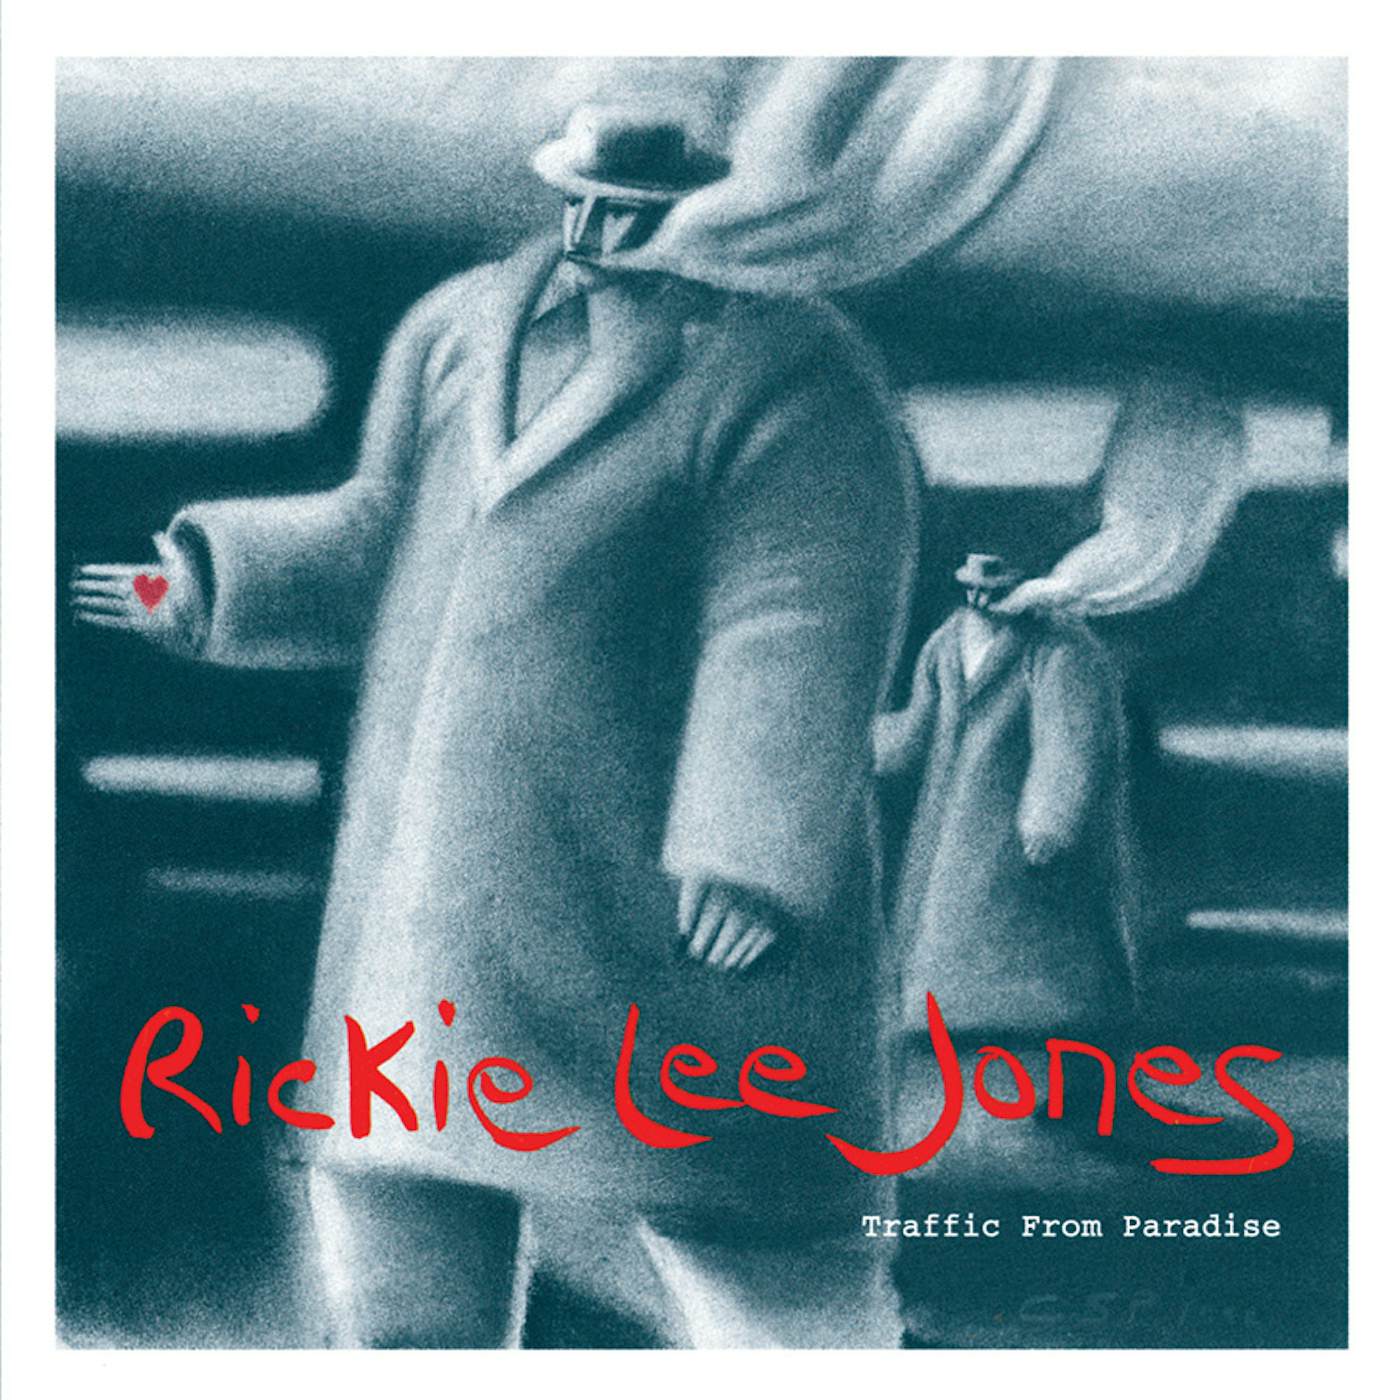 Rickie Lee Jones TRAFFIC FROM PARADISE CD